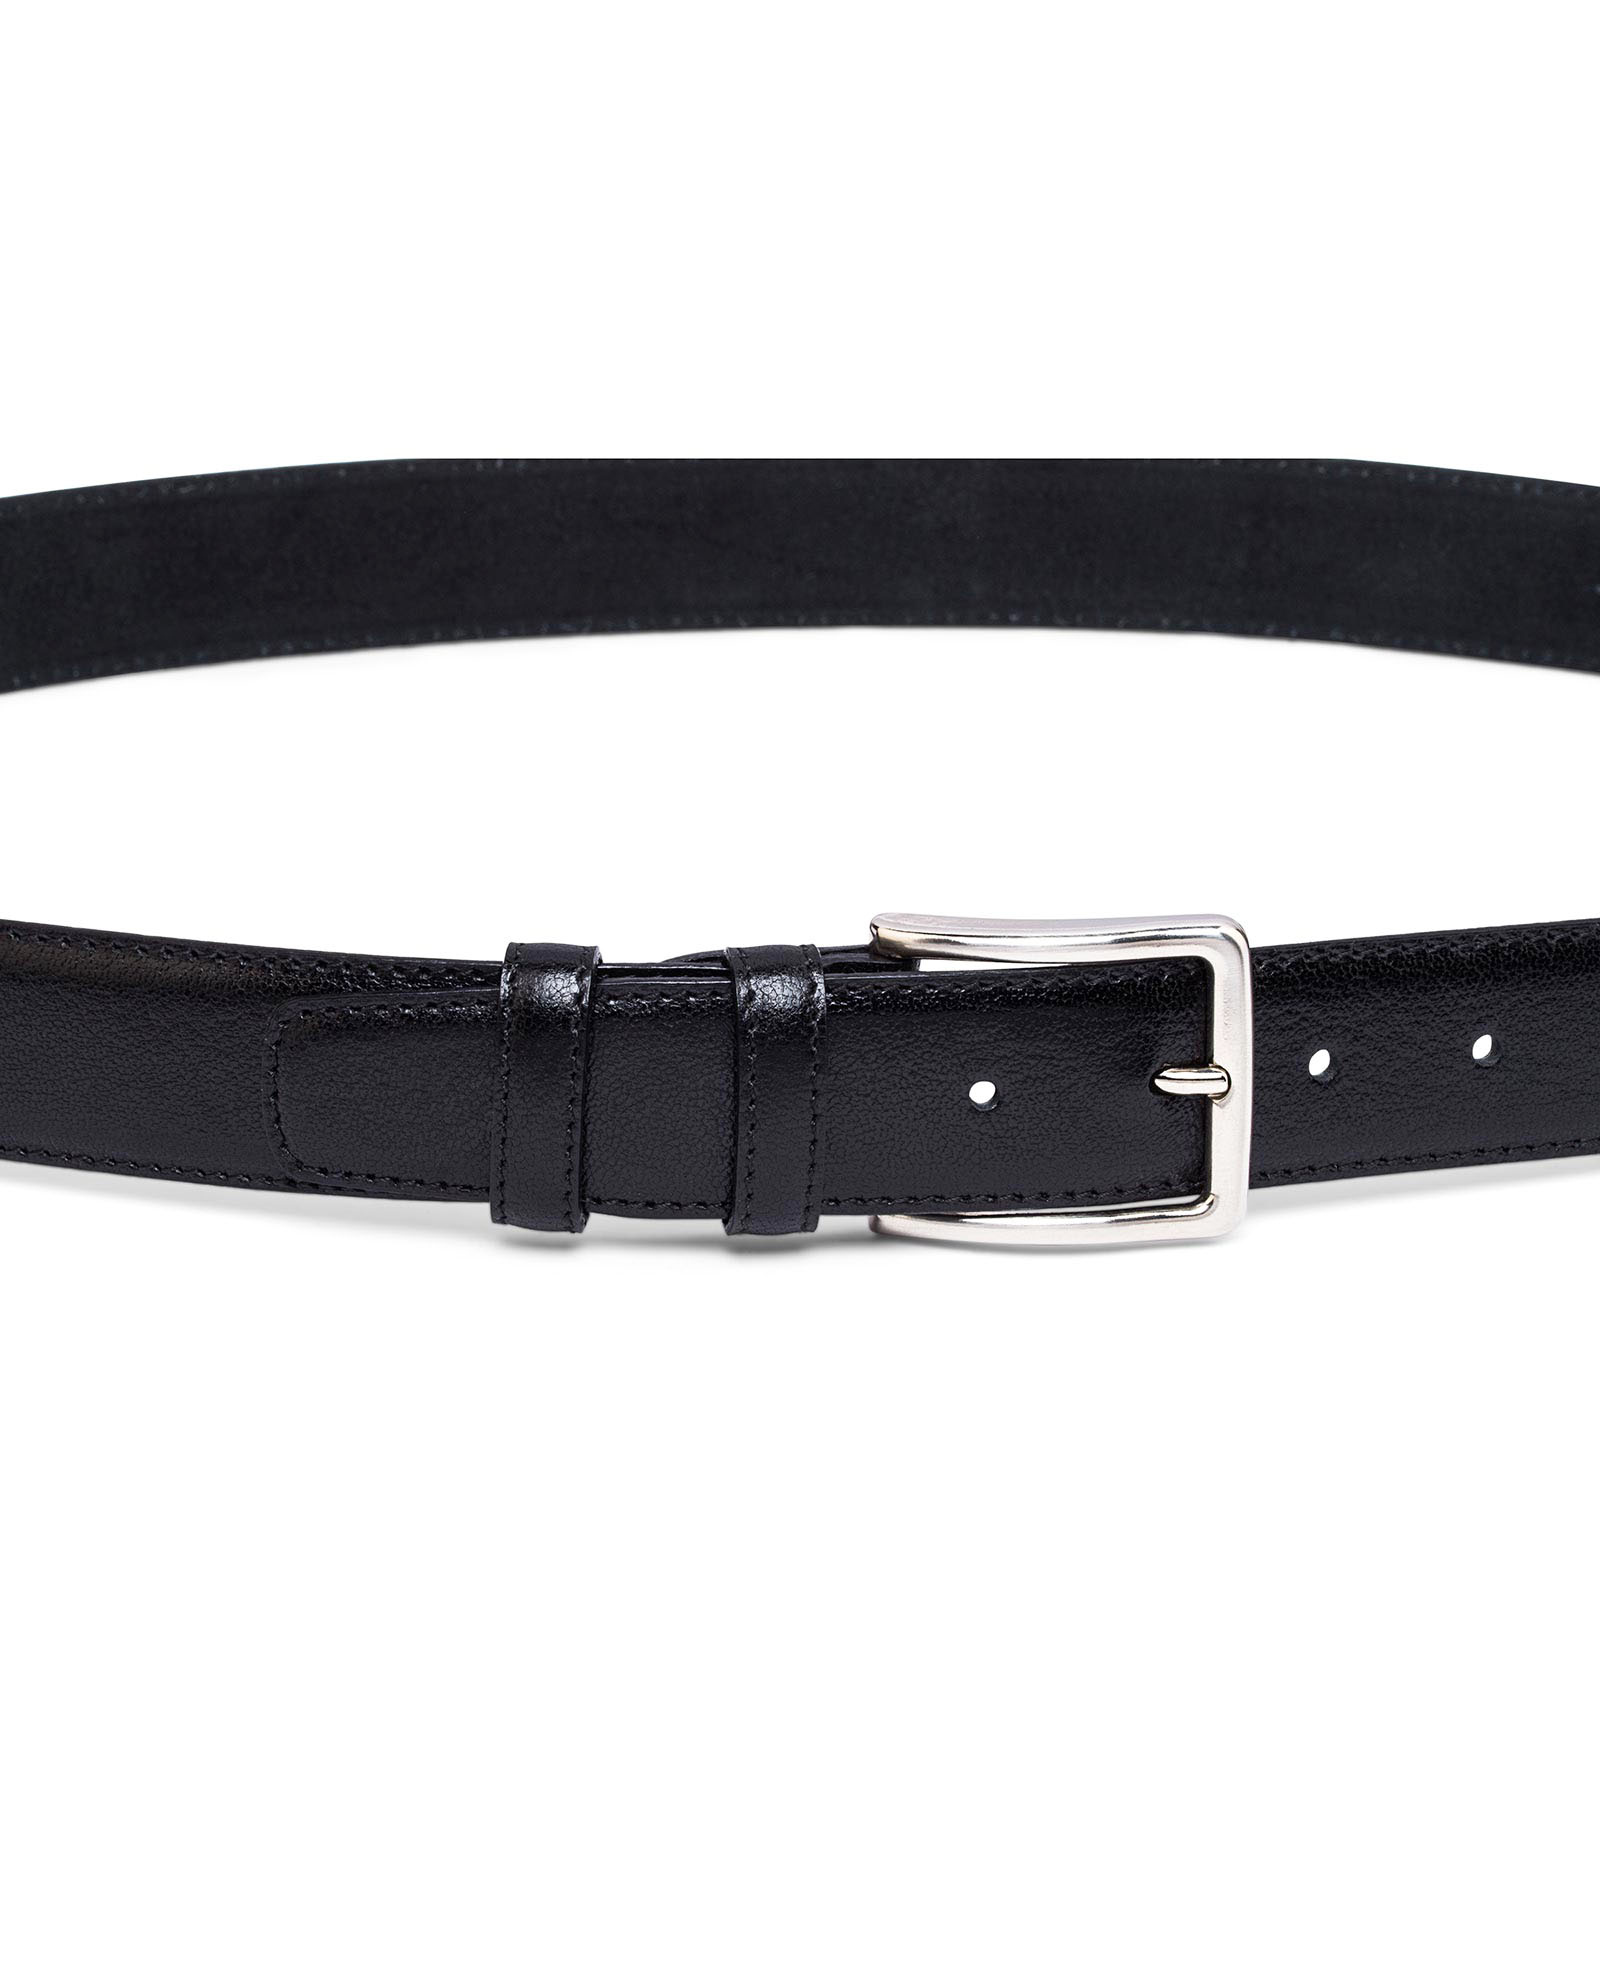 Buy Mens Black Leather Belt | Italian Calfskin | Free shipping